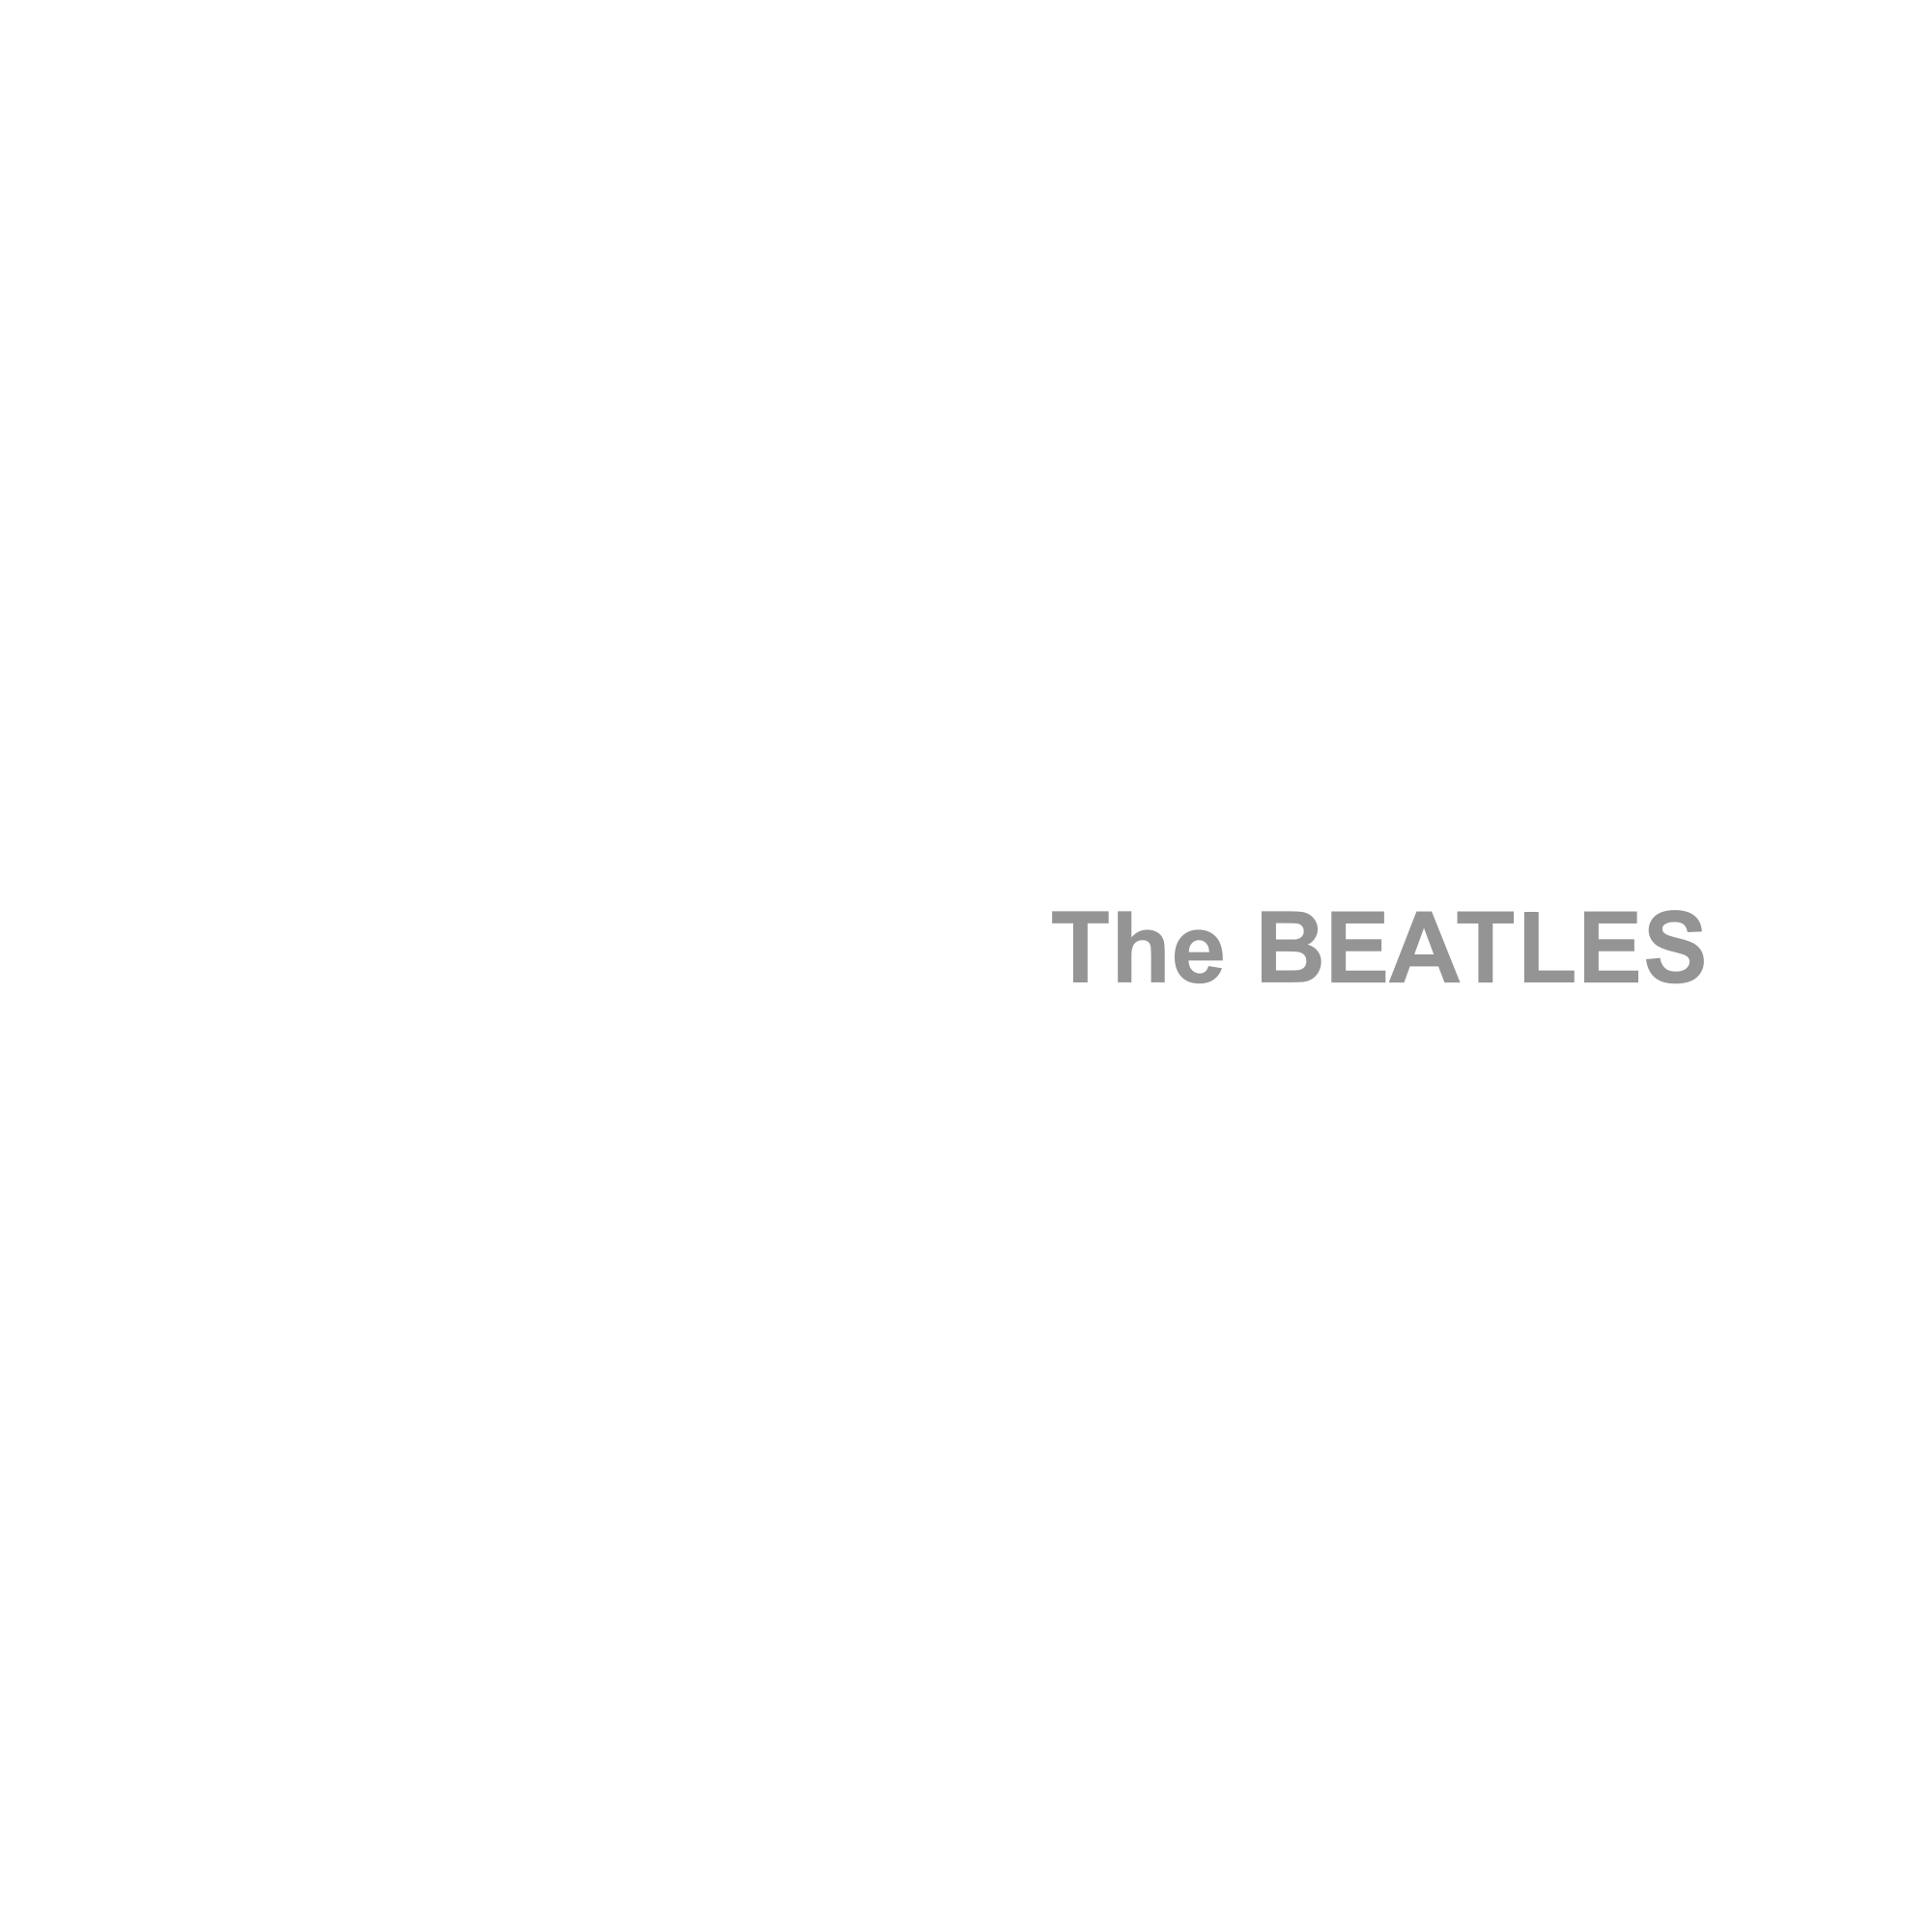 ‘The White Album’ turns 50